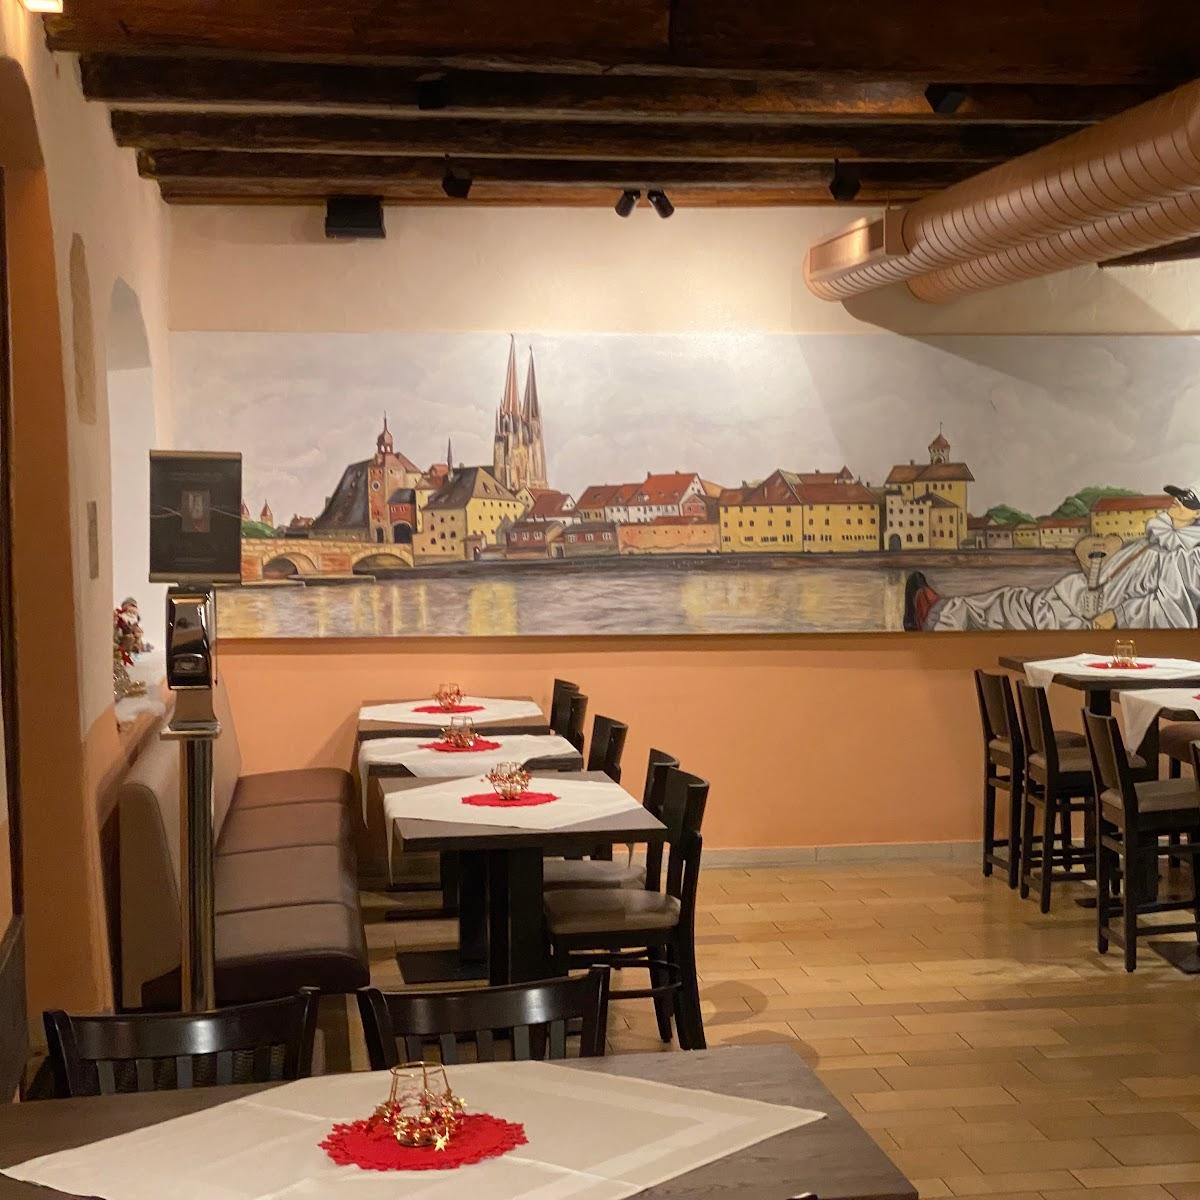 Restaurant "La Fenice" in Regensburg